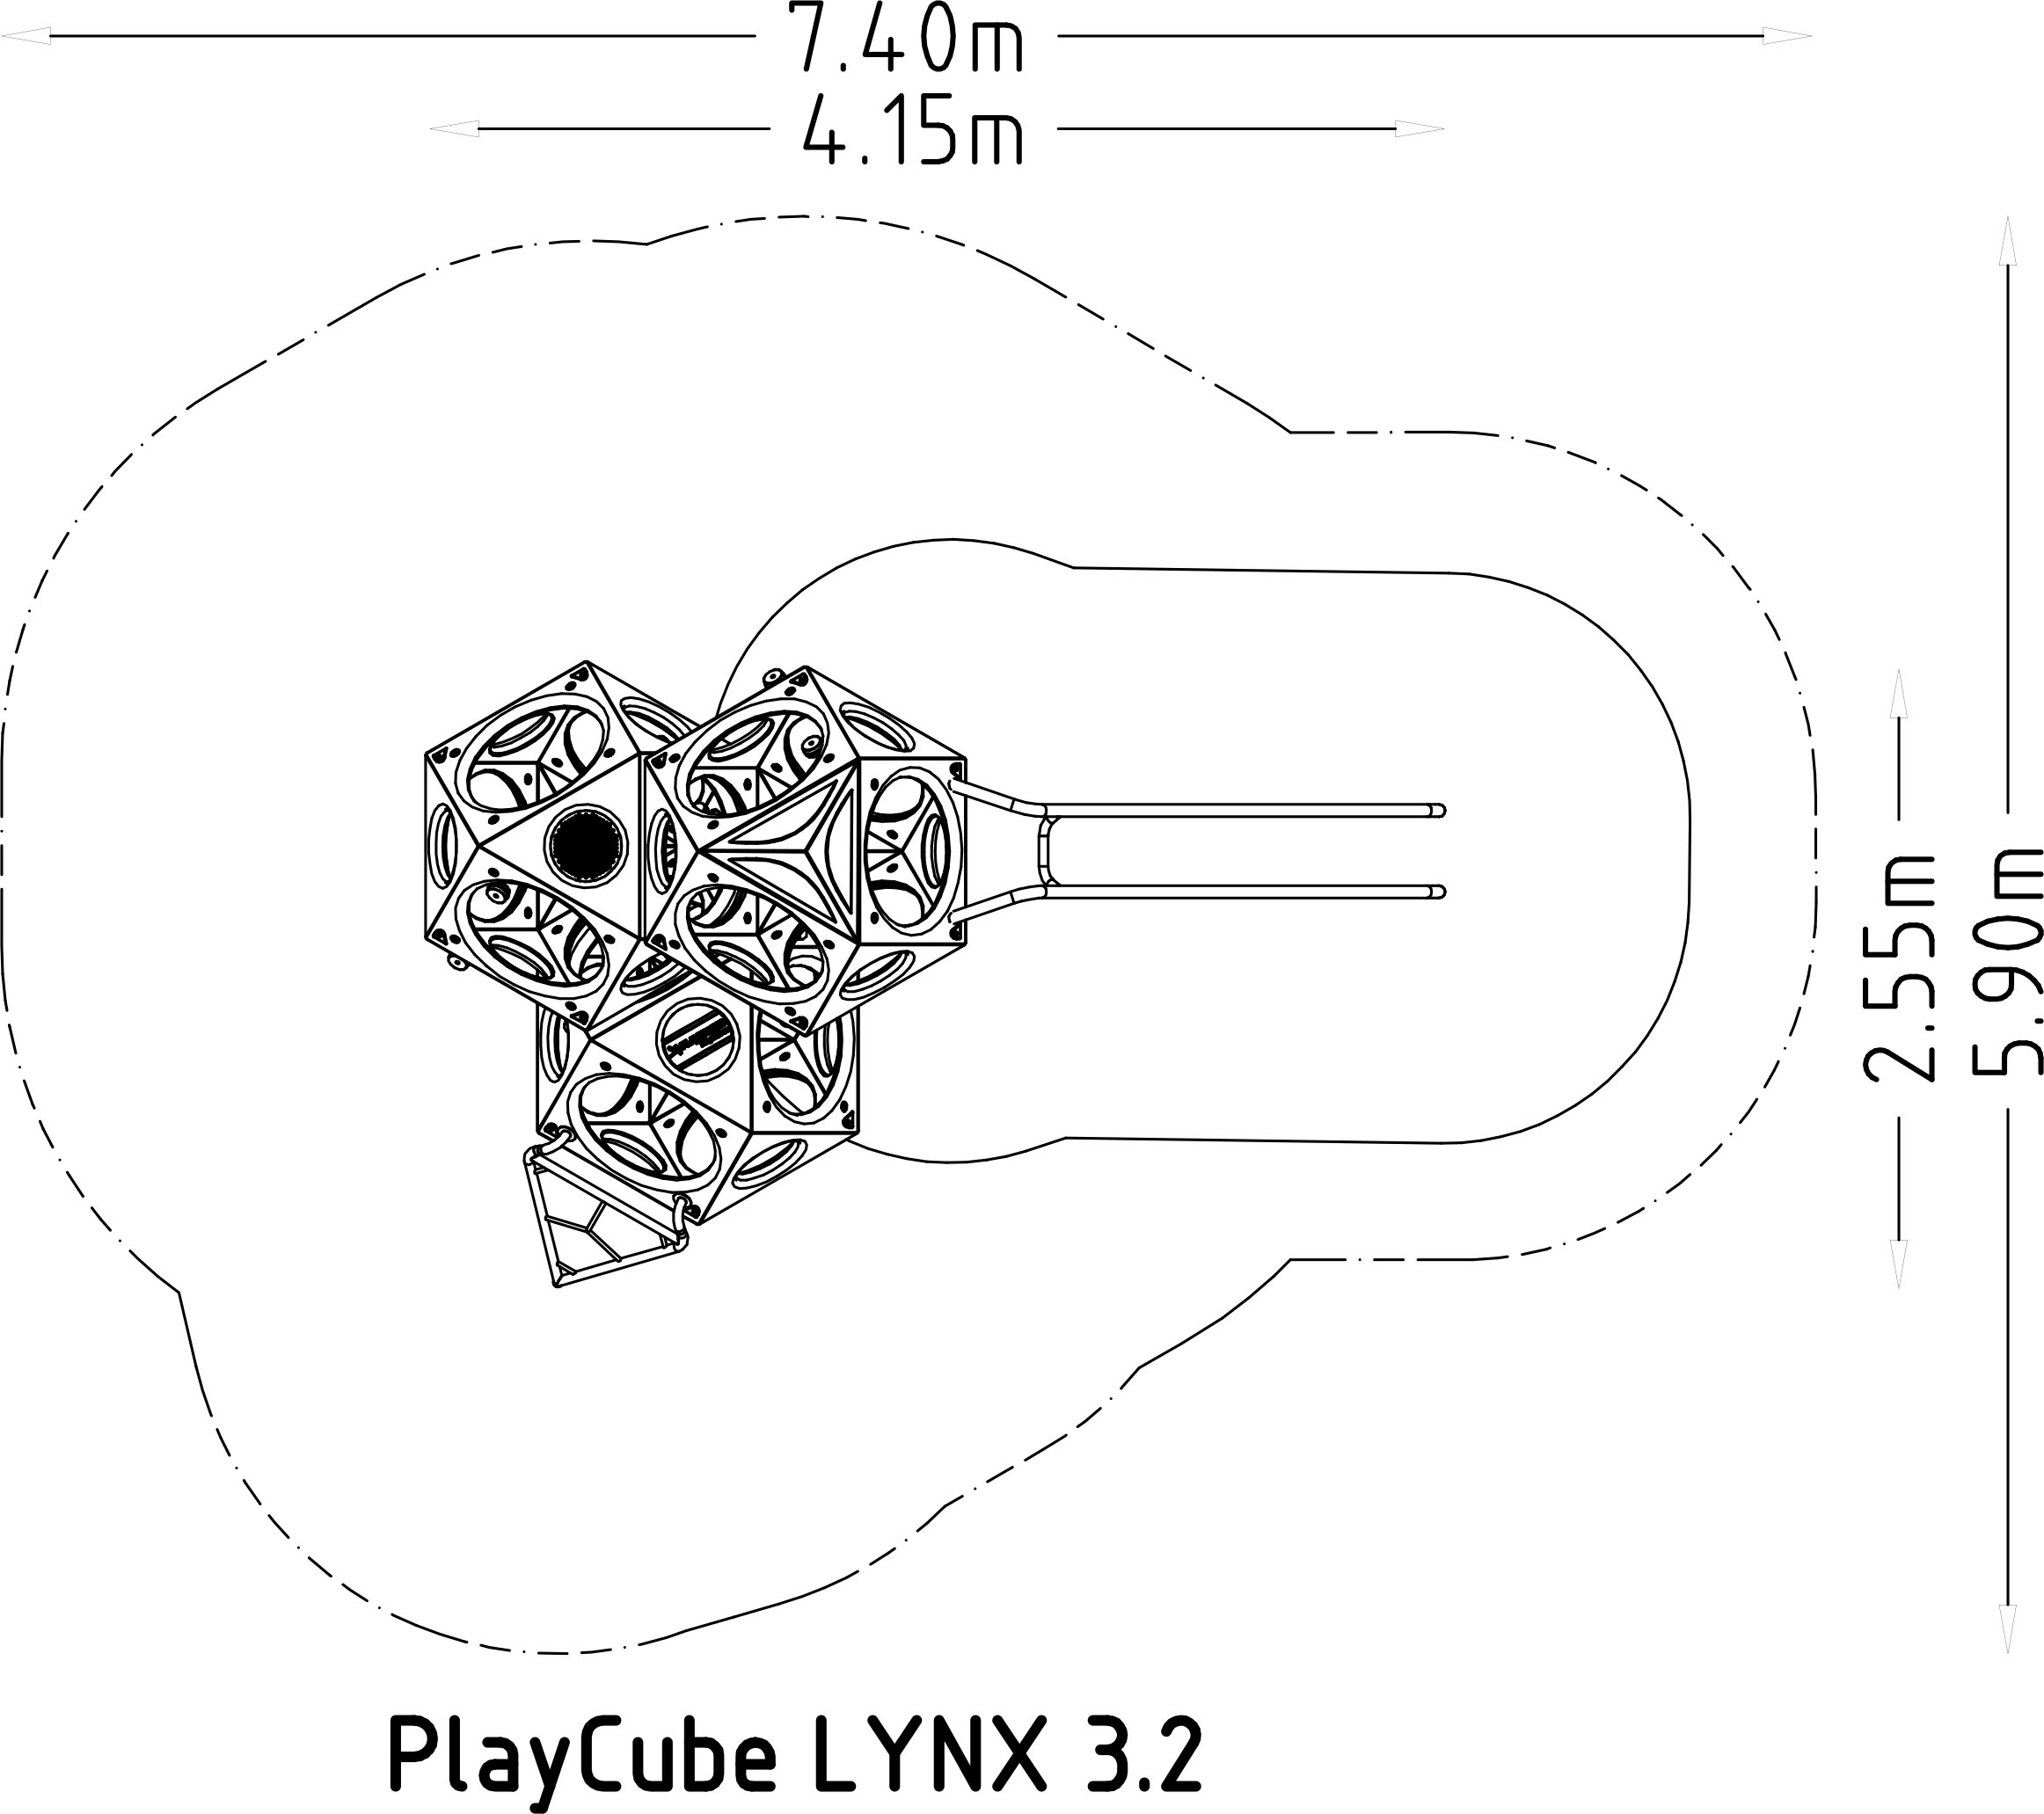 PlayCubes Lynx 3.2